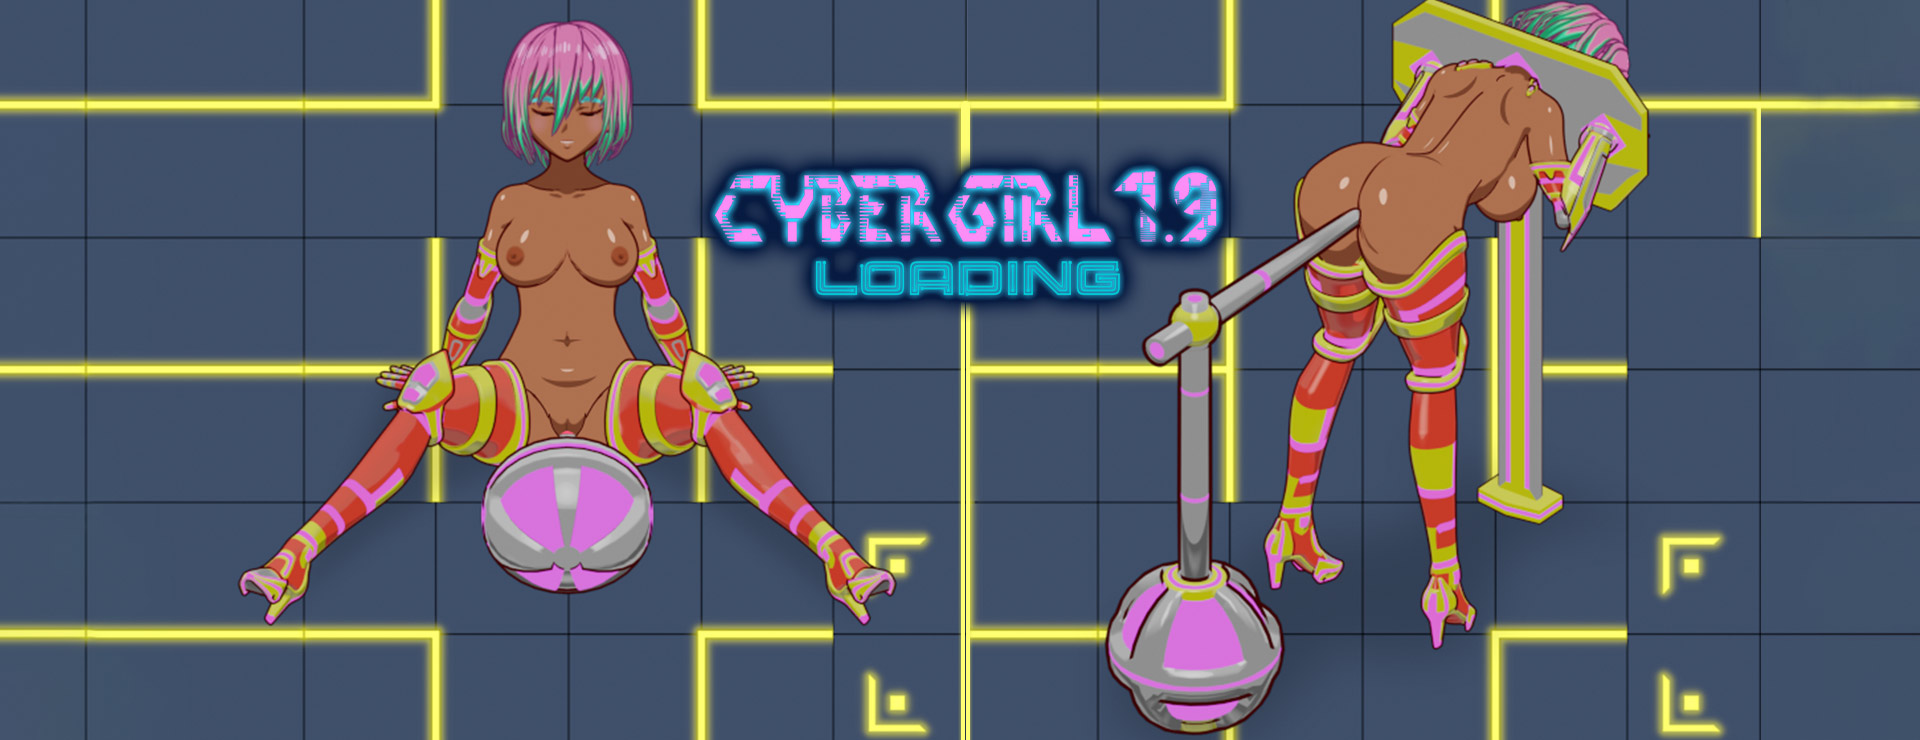 Cyber Girl 1.9 LOADING - Action Aventure Jeu